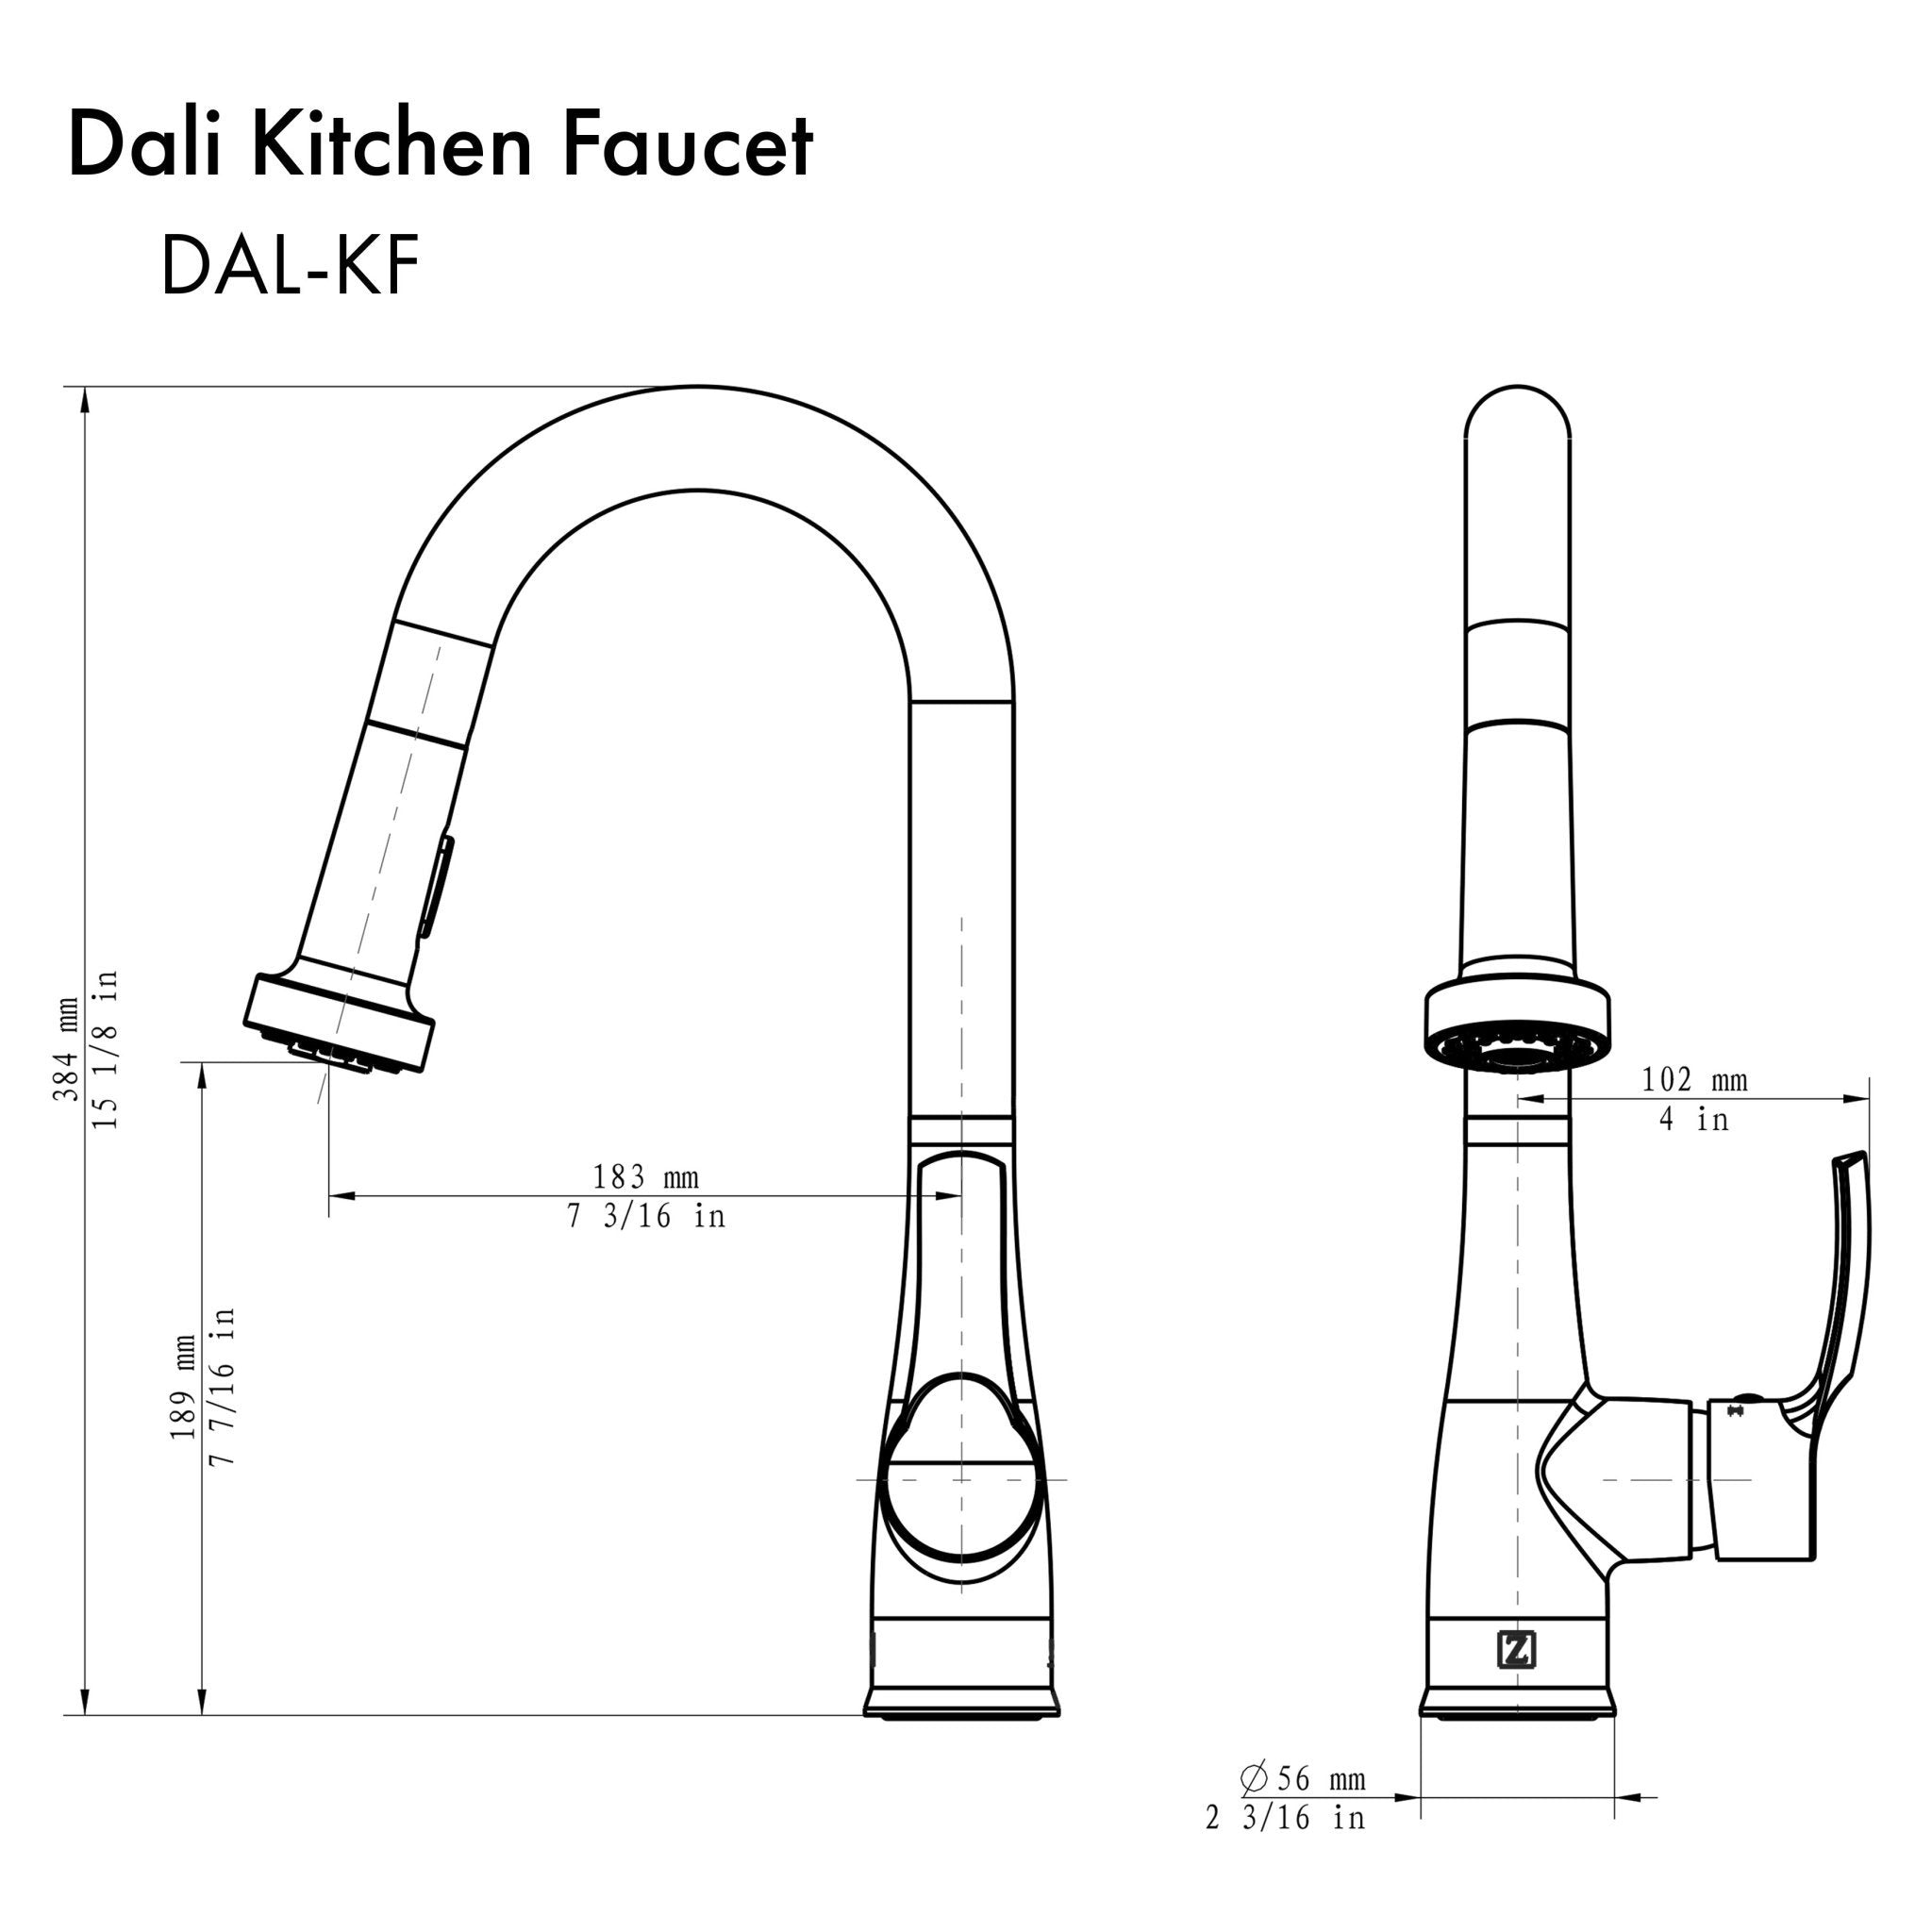 ZLINE Dali Kitchen Faucet (DAL-KF) Dimensional Diagram